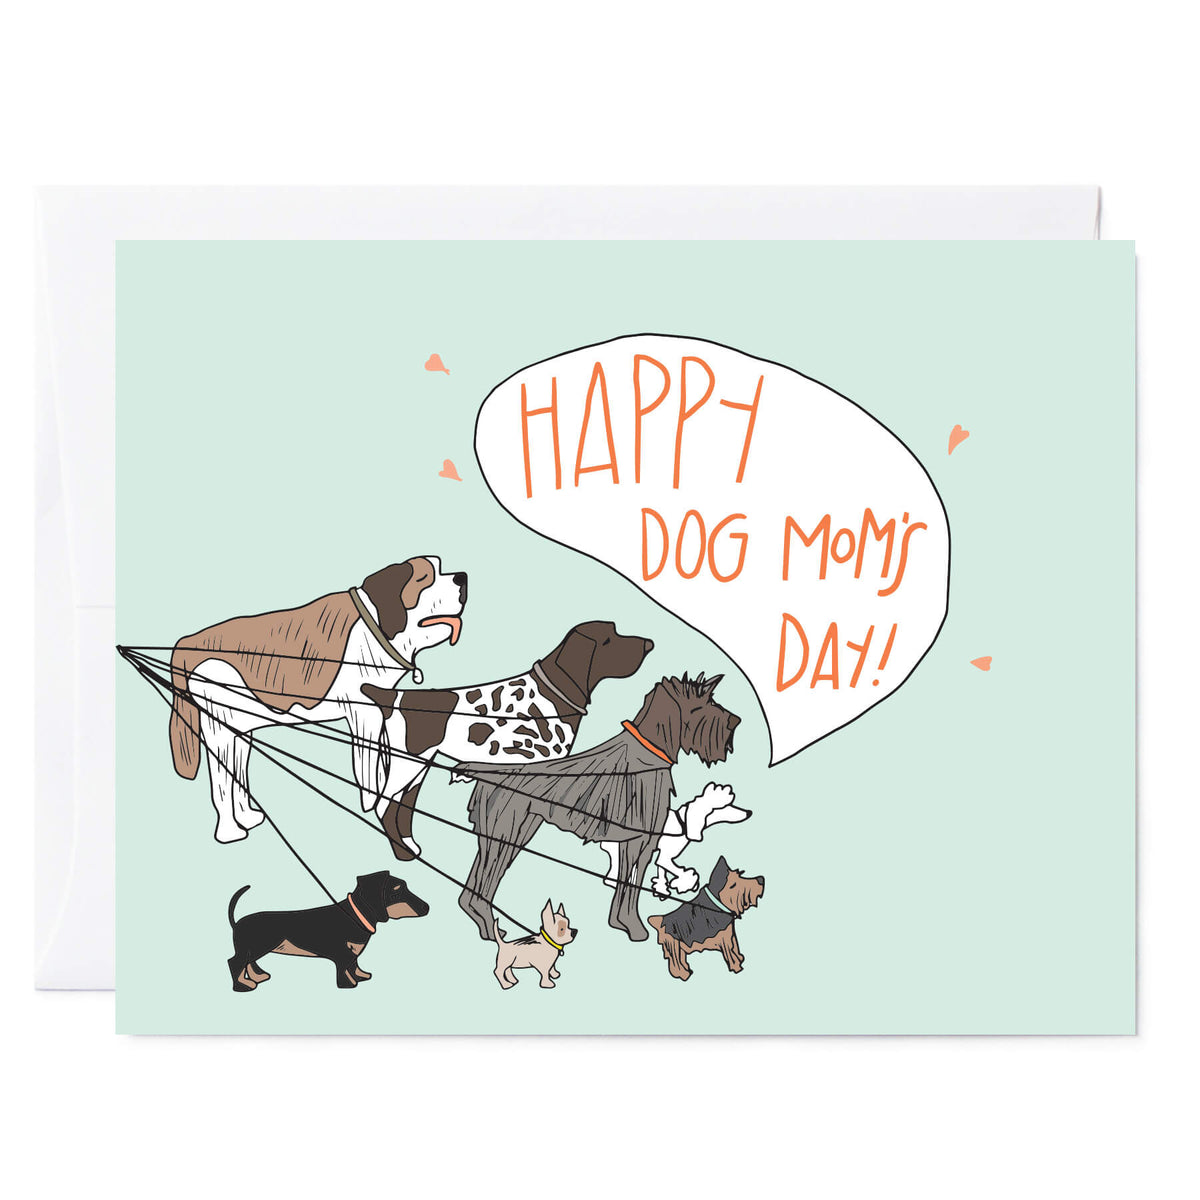 Dog Mom! Dog Walker Card